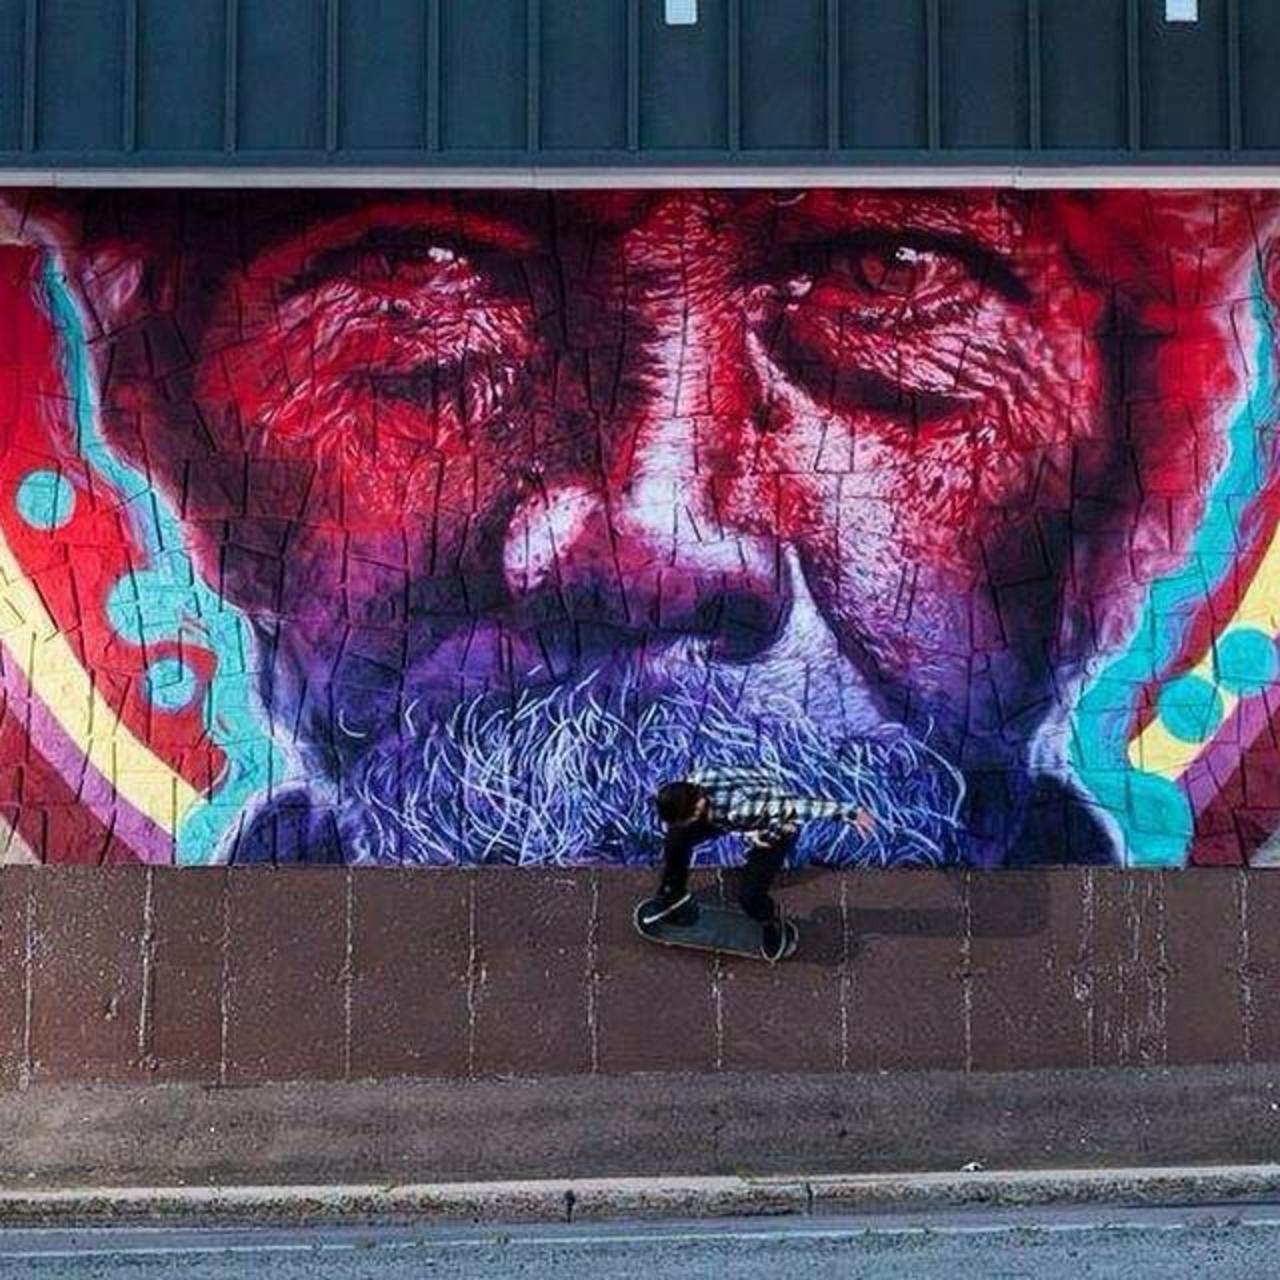 From Montcon, Canada, Kevin Ledo's class Street Art portrait 

#art #mural #graffiti #streetart http://t.co/HFsmSvPtoA